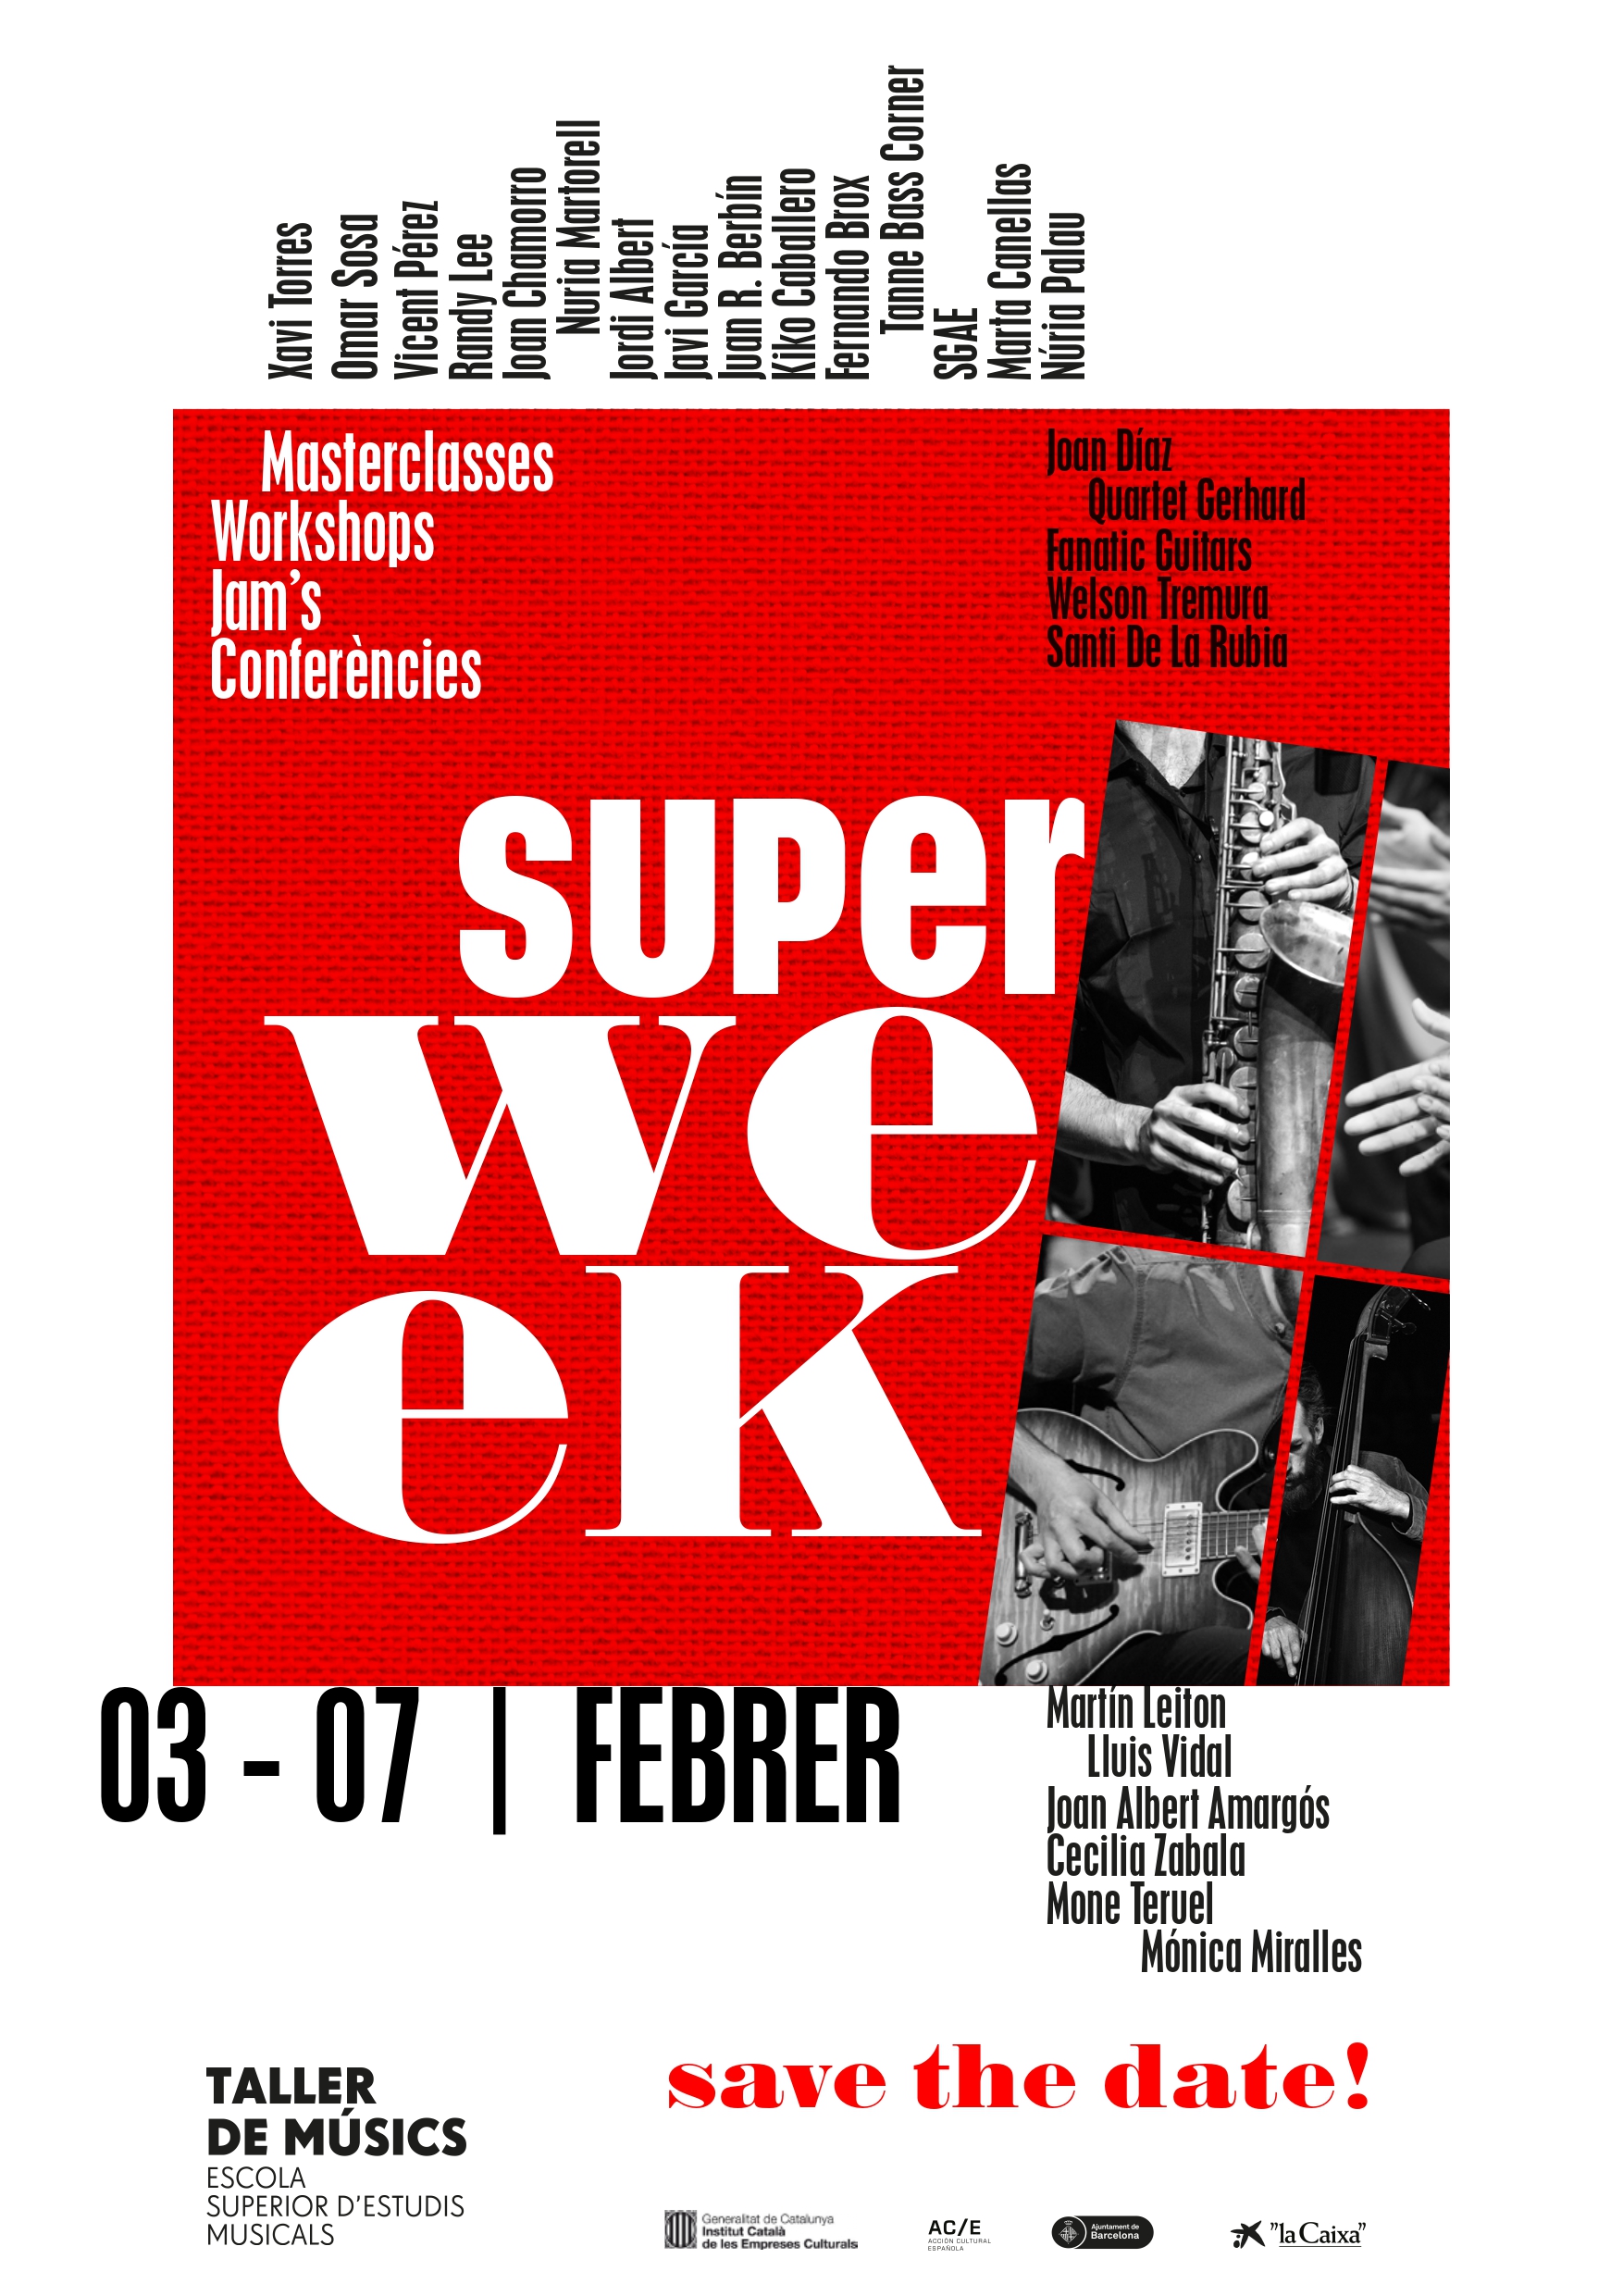 Superweek 2020 Taller de Músics ESEM